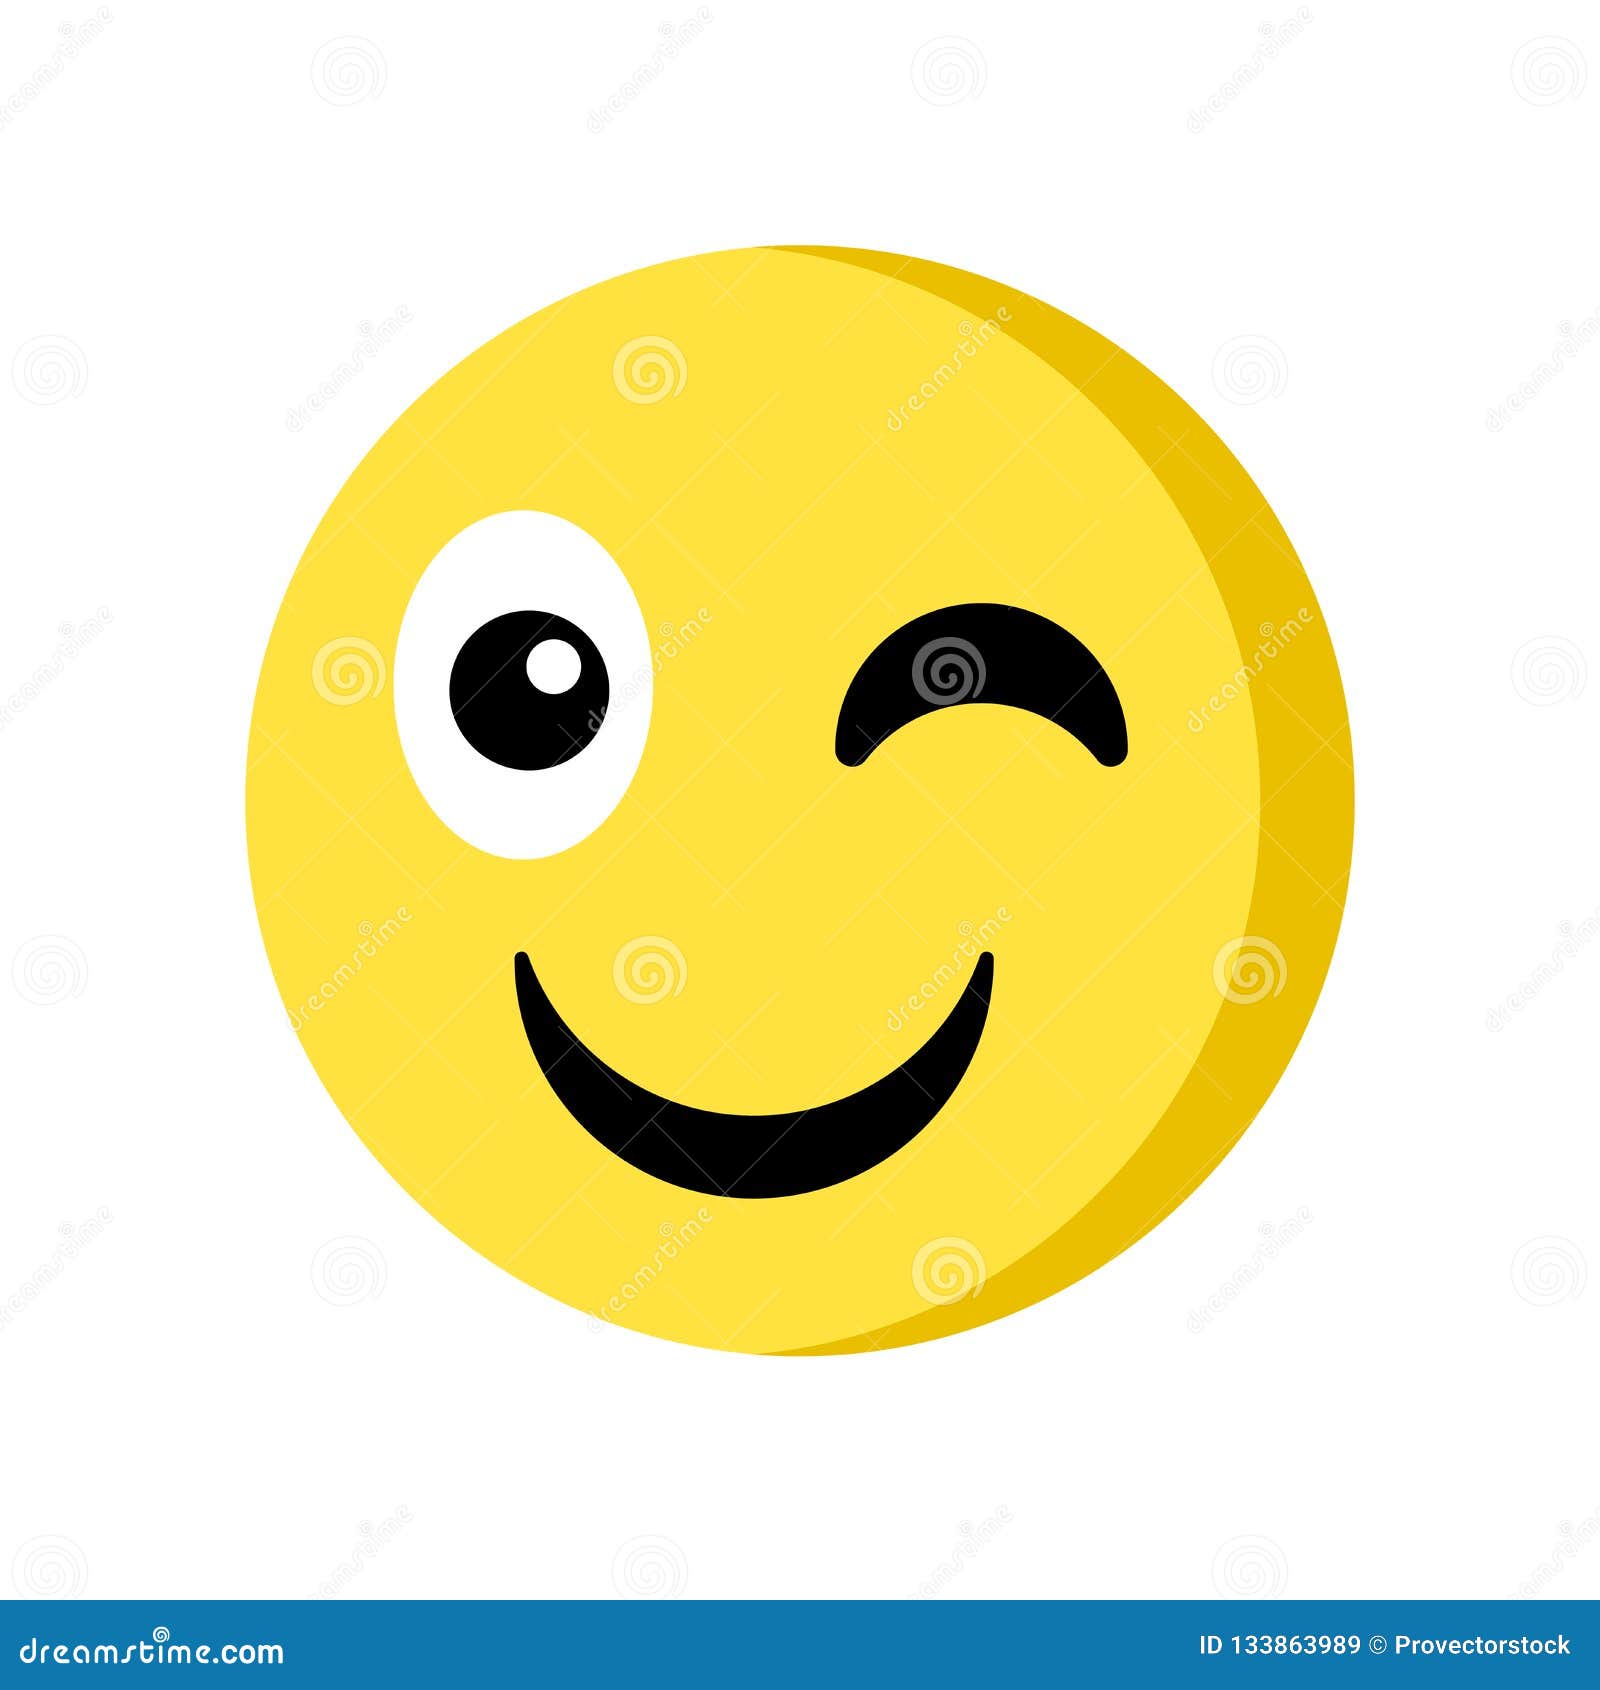 Wink Emoji Icon Isolated on White Background Stock Vector - Illustration of  people, emotion: 133863989